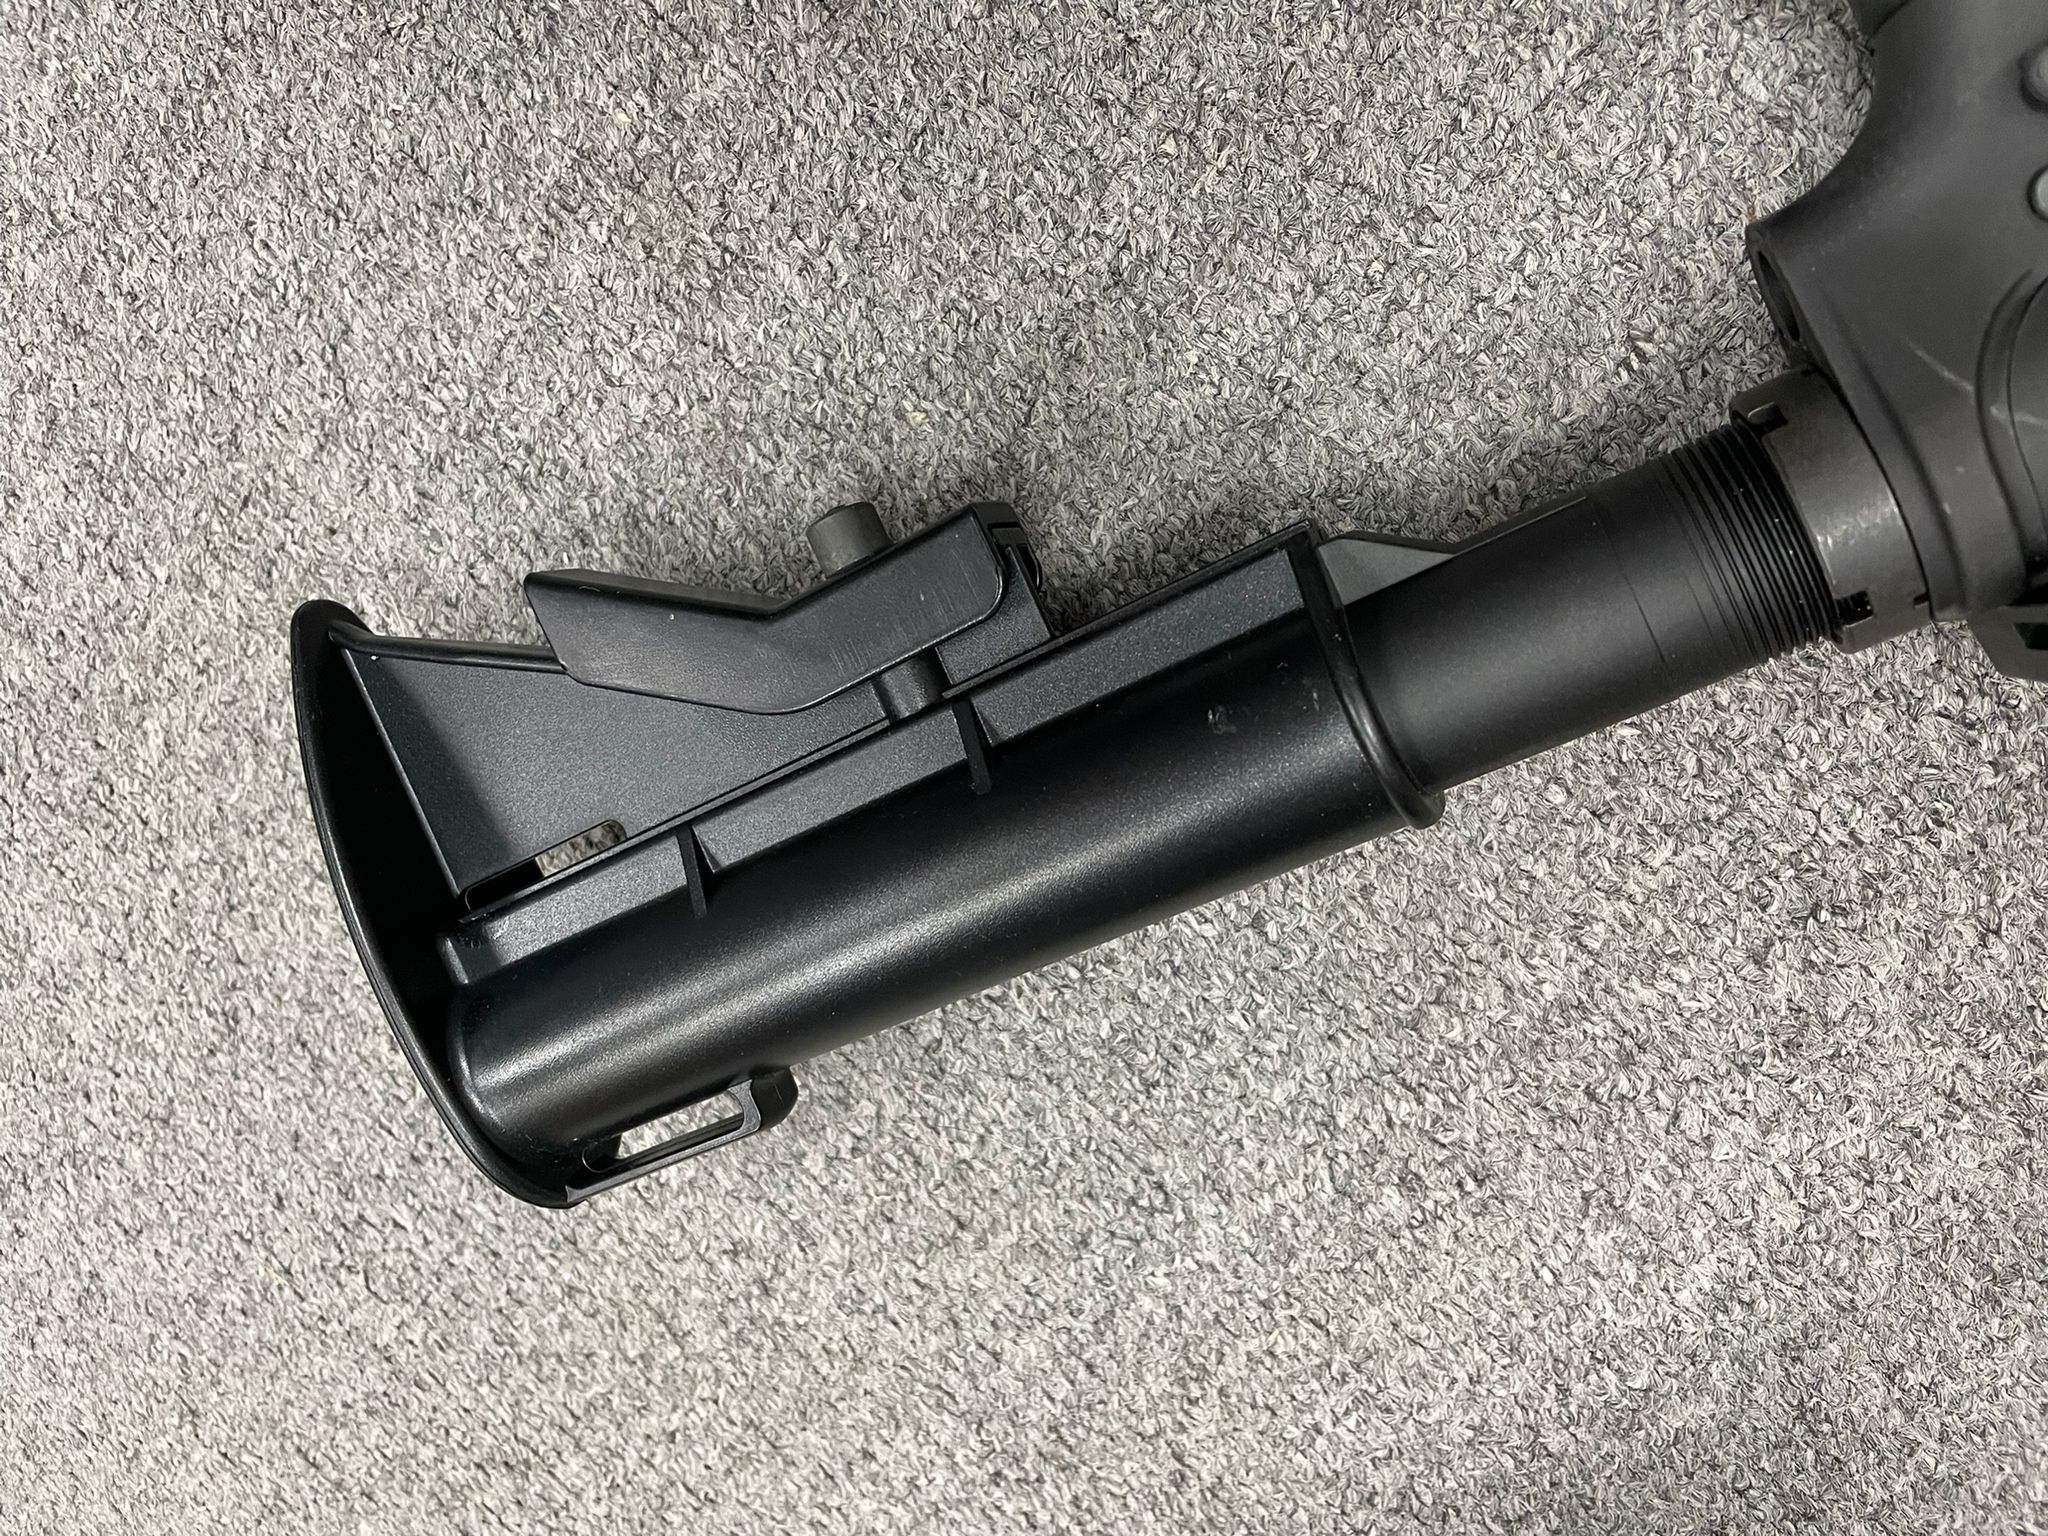 [Guns Modify] Complete COLT M723 Carbine [Tokyo Marui MWS System]